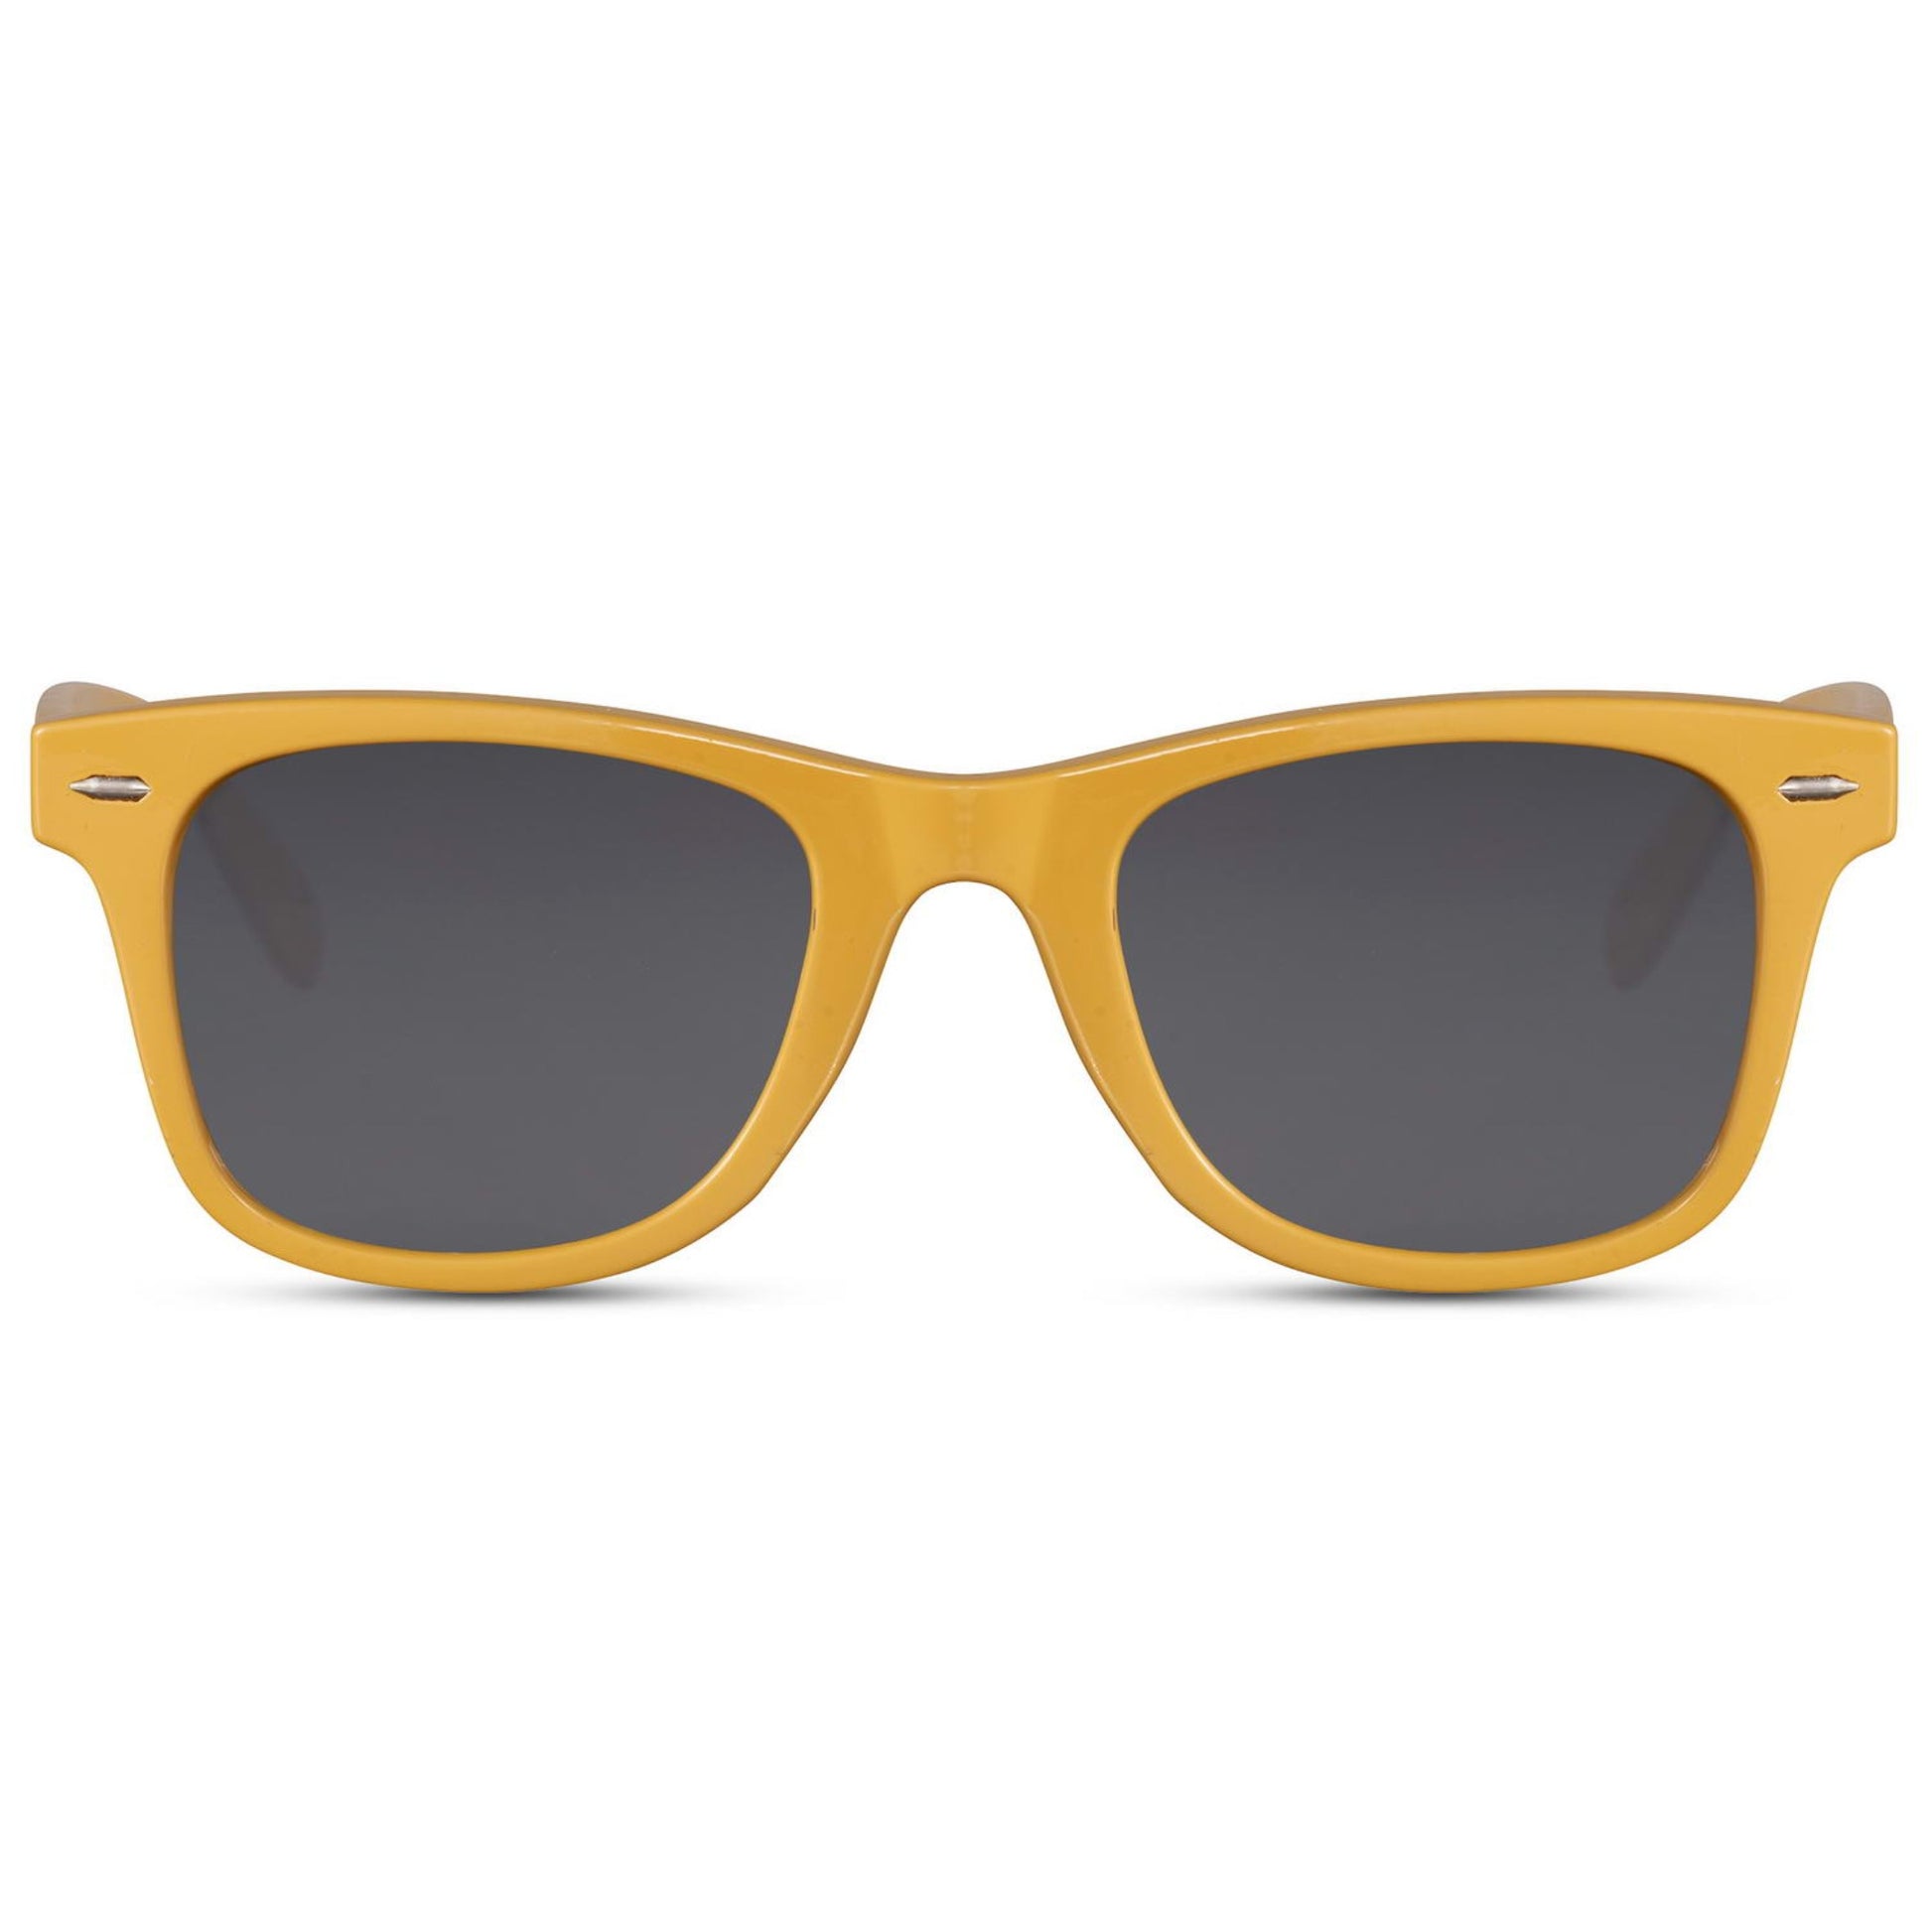 Nevada - Sunglasses - Exposure Sunglasses - NDL6188